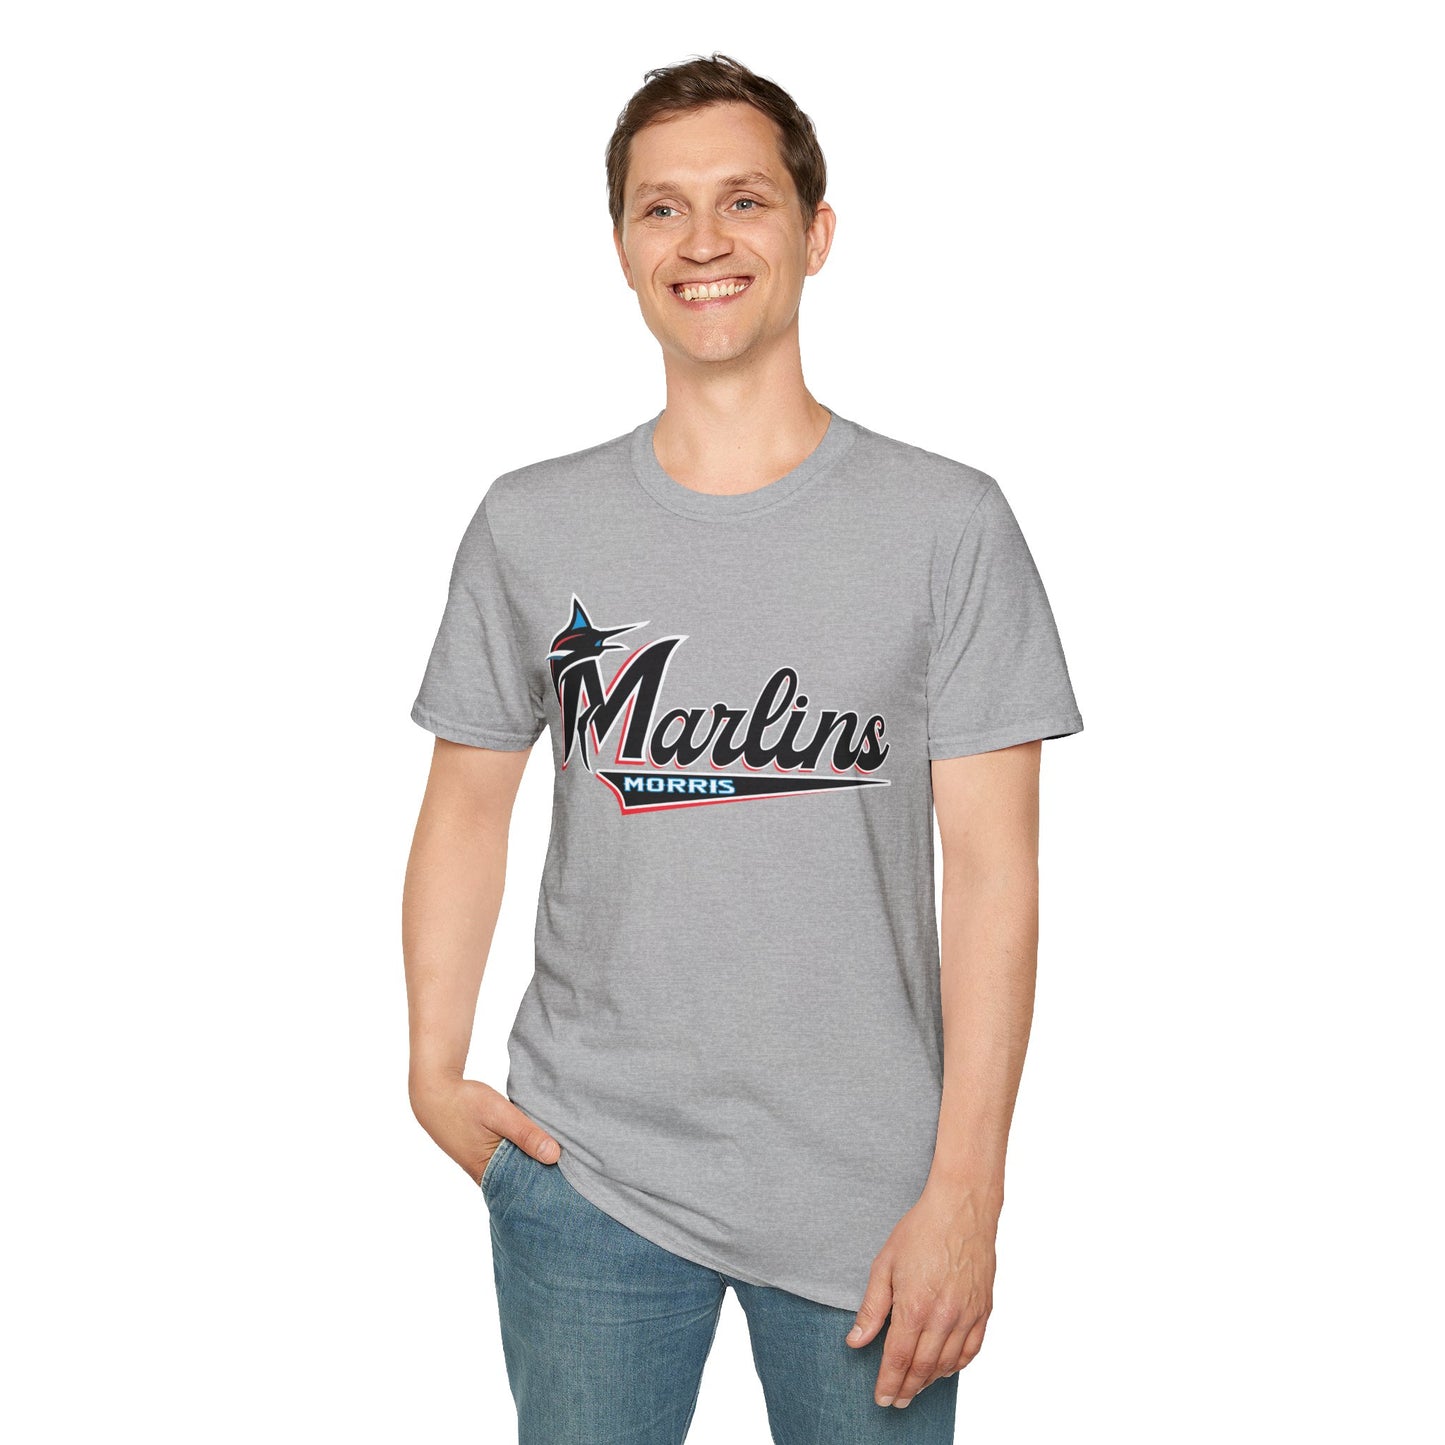 Morris Marlins Softstyle T-Shirt